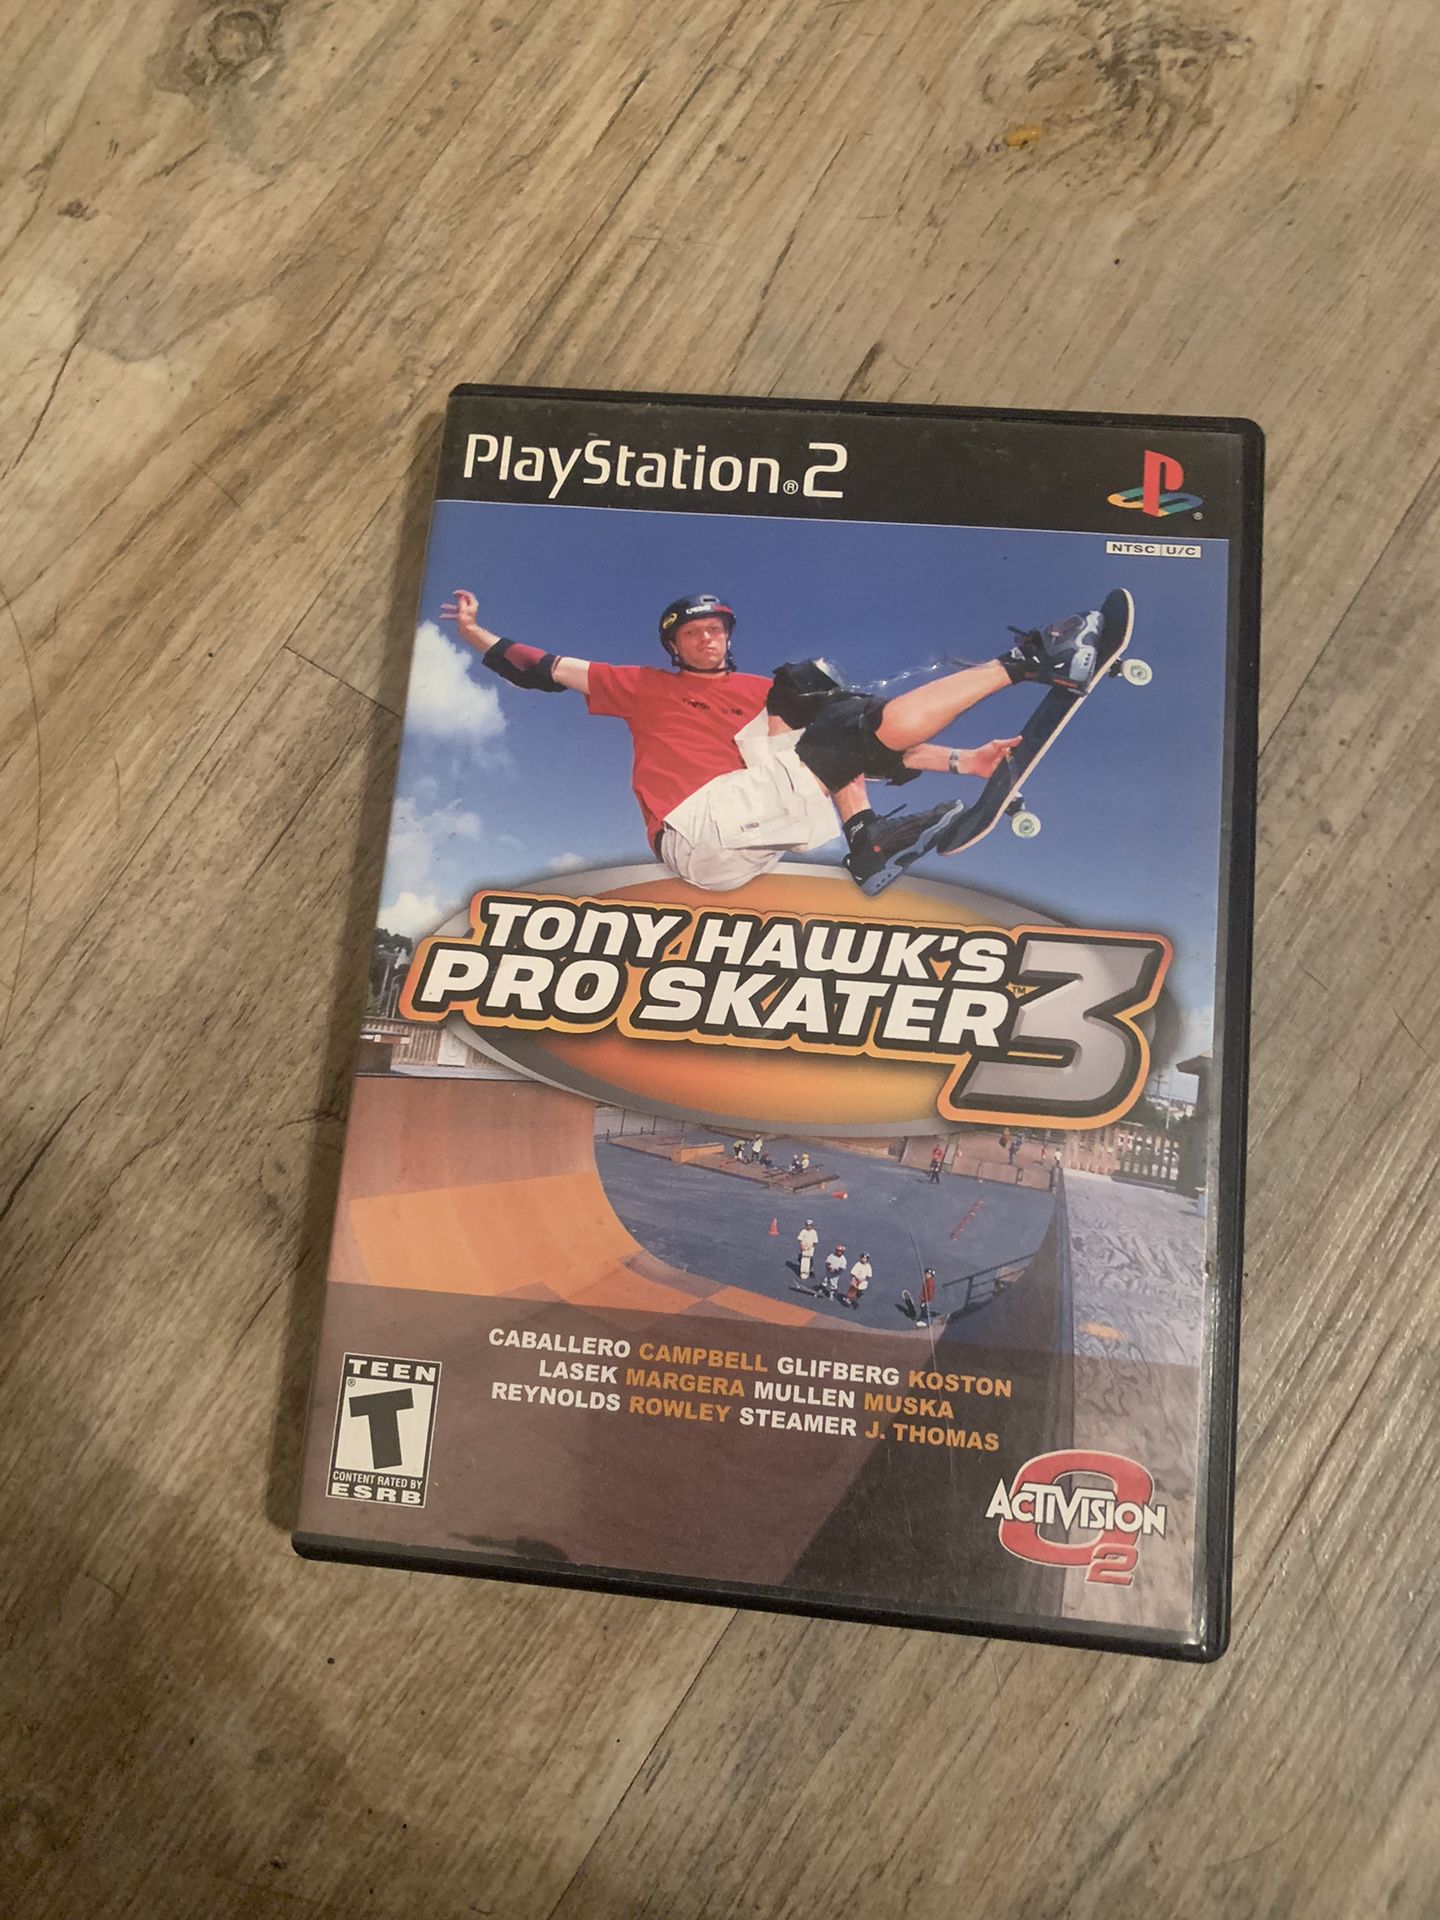 Tony Hawk's Pro Skater 3 for PlayStation 2